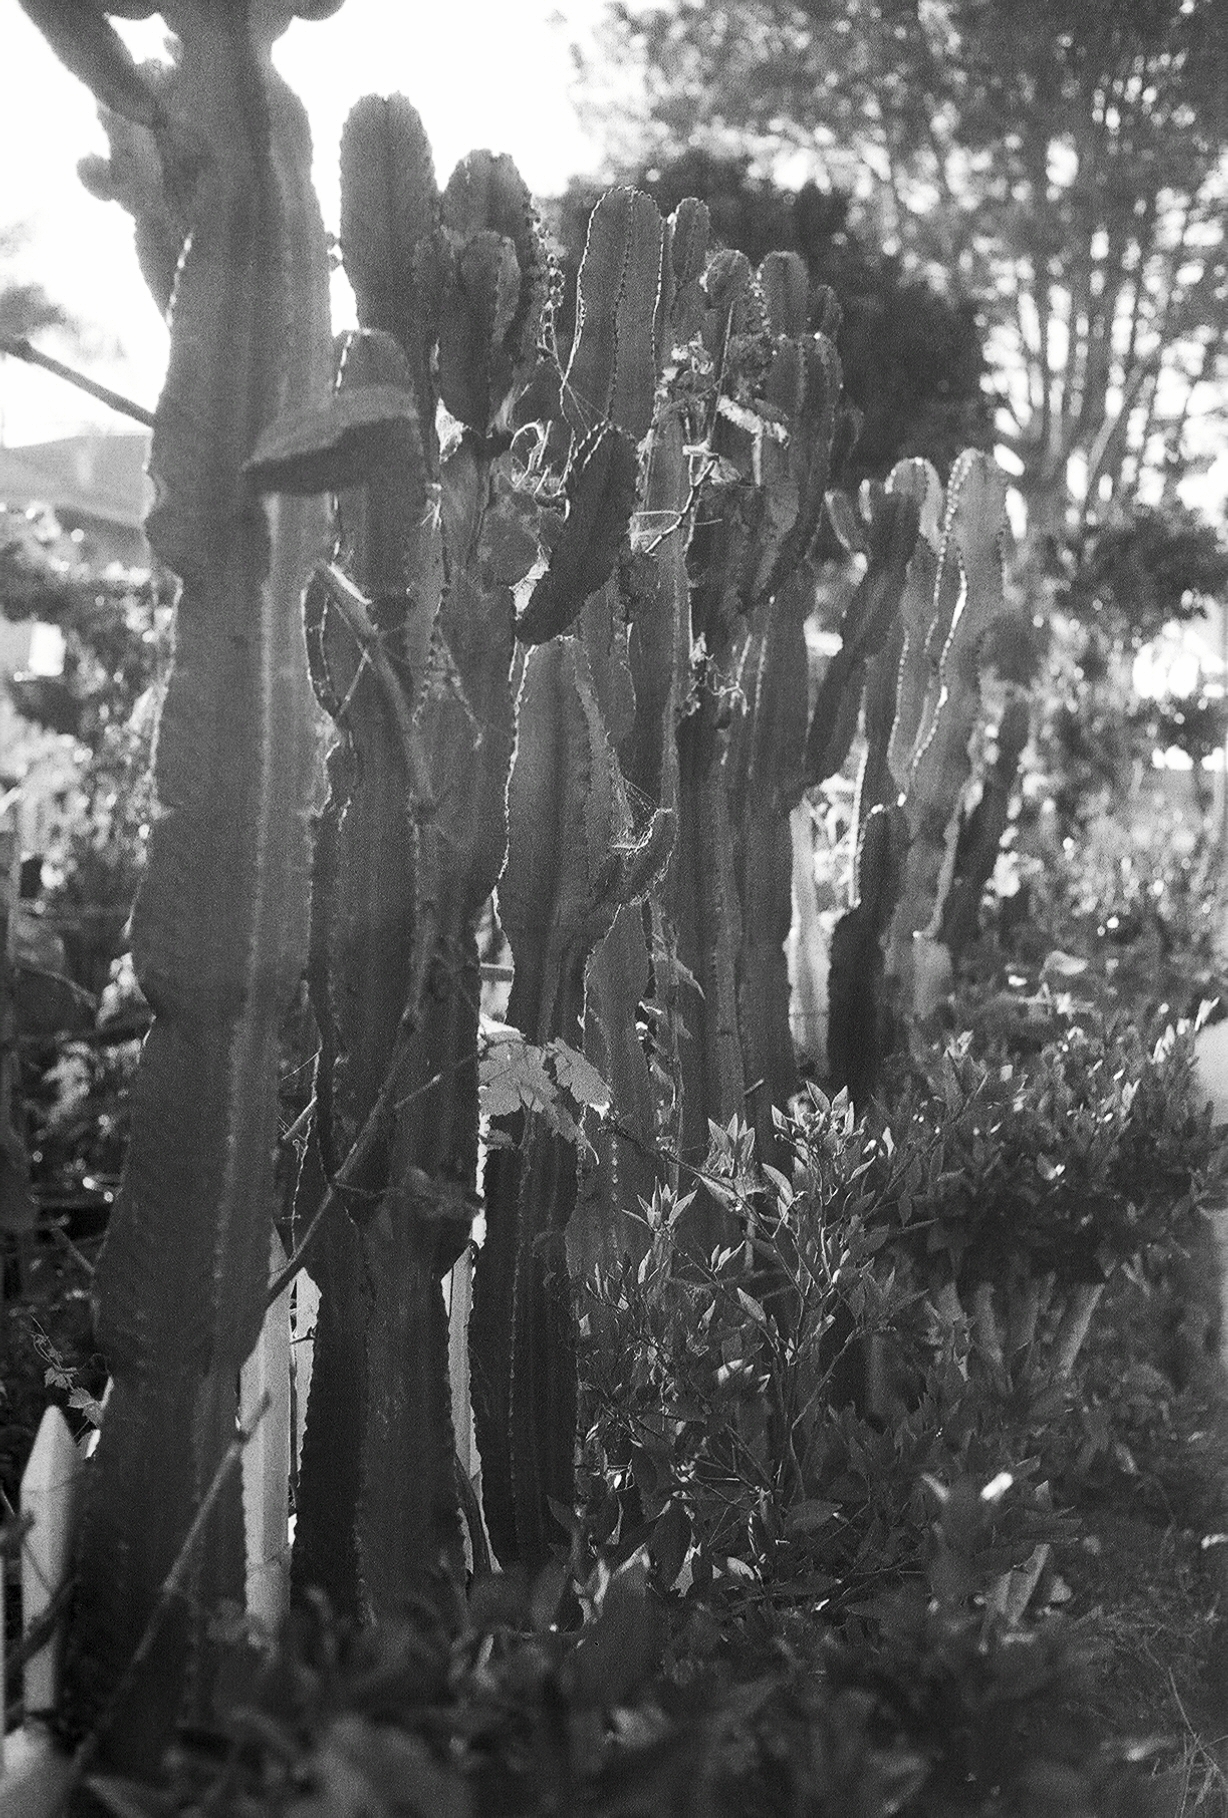 Black and White Film Photograph of Cacti in Encinitas California